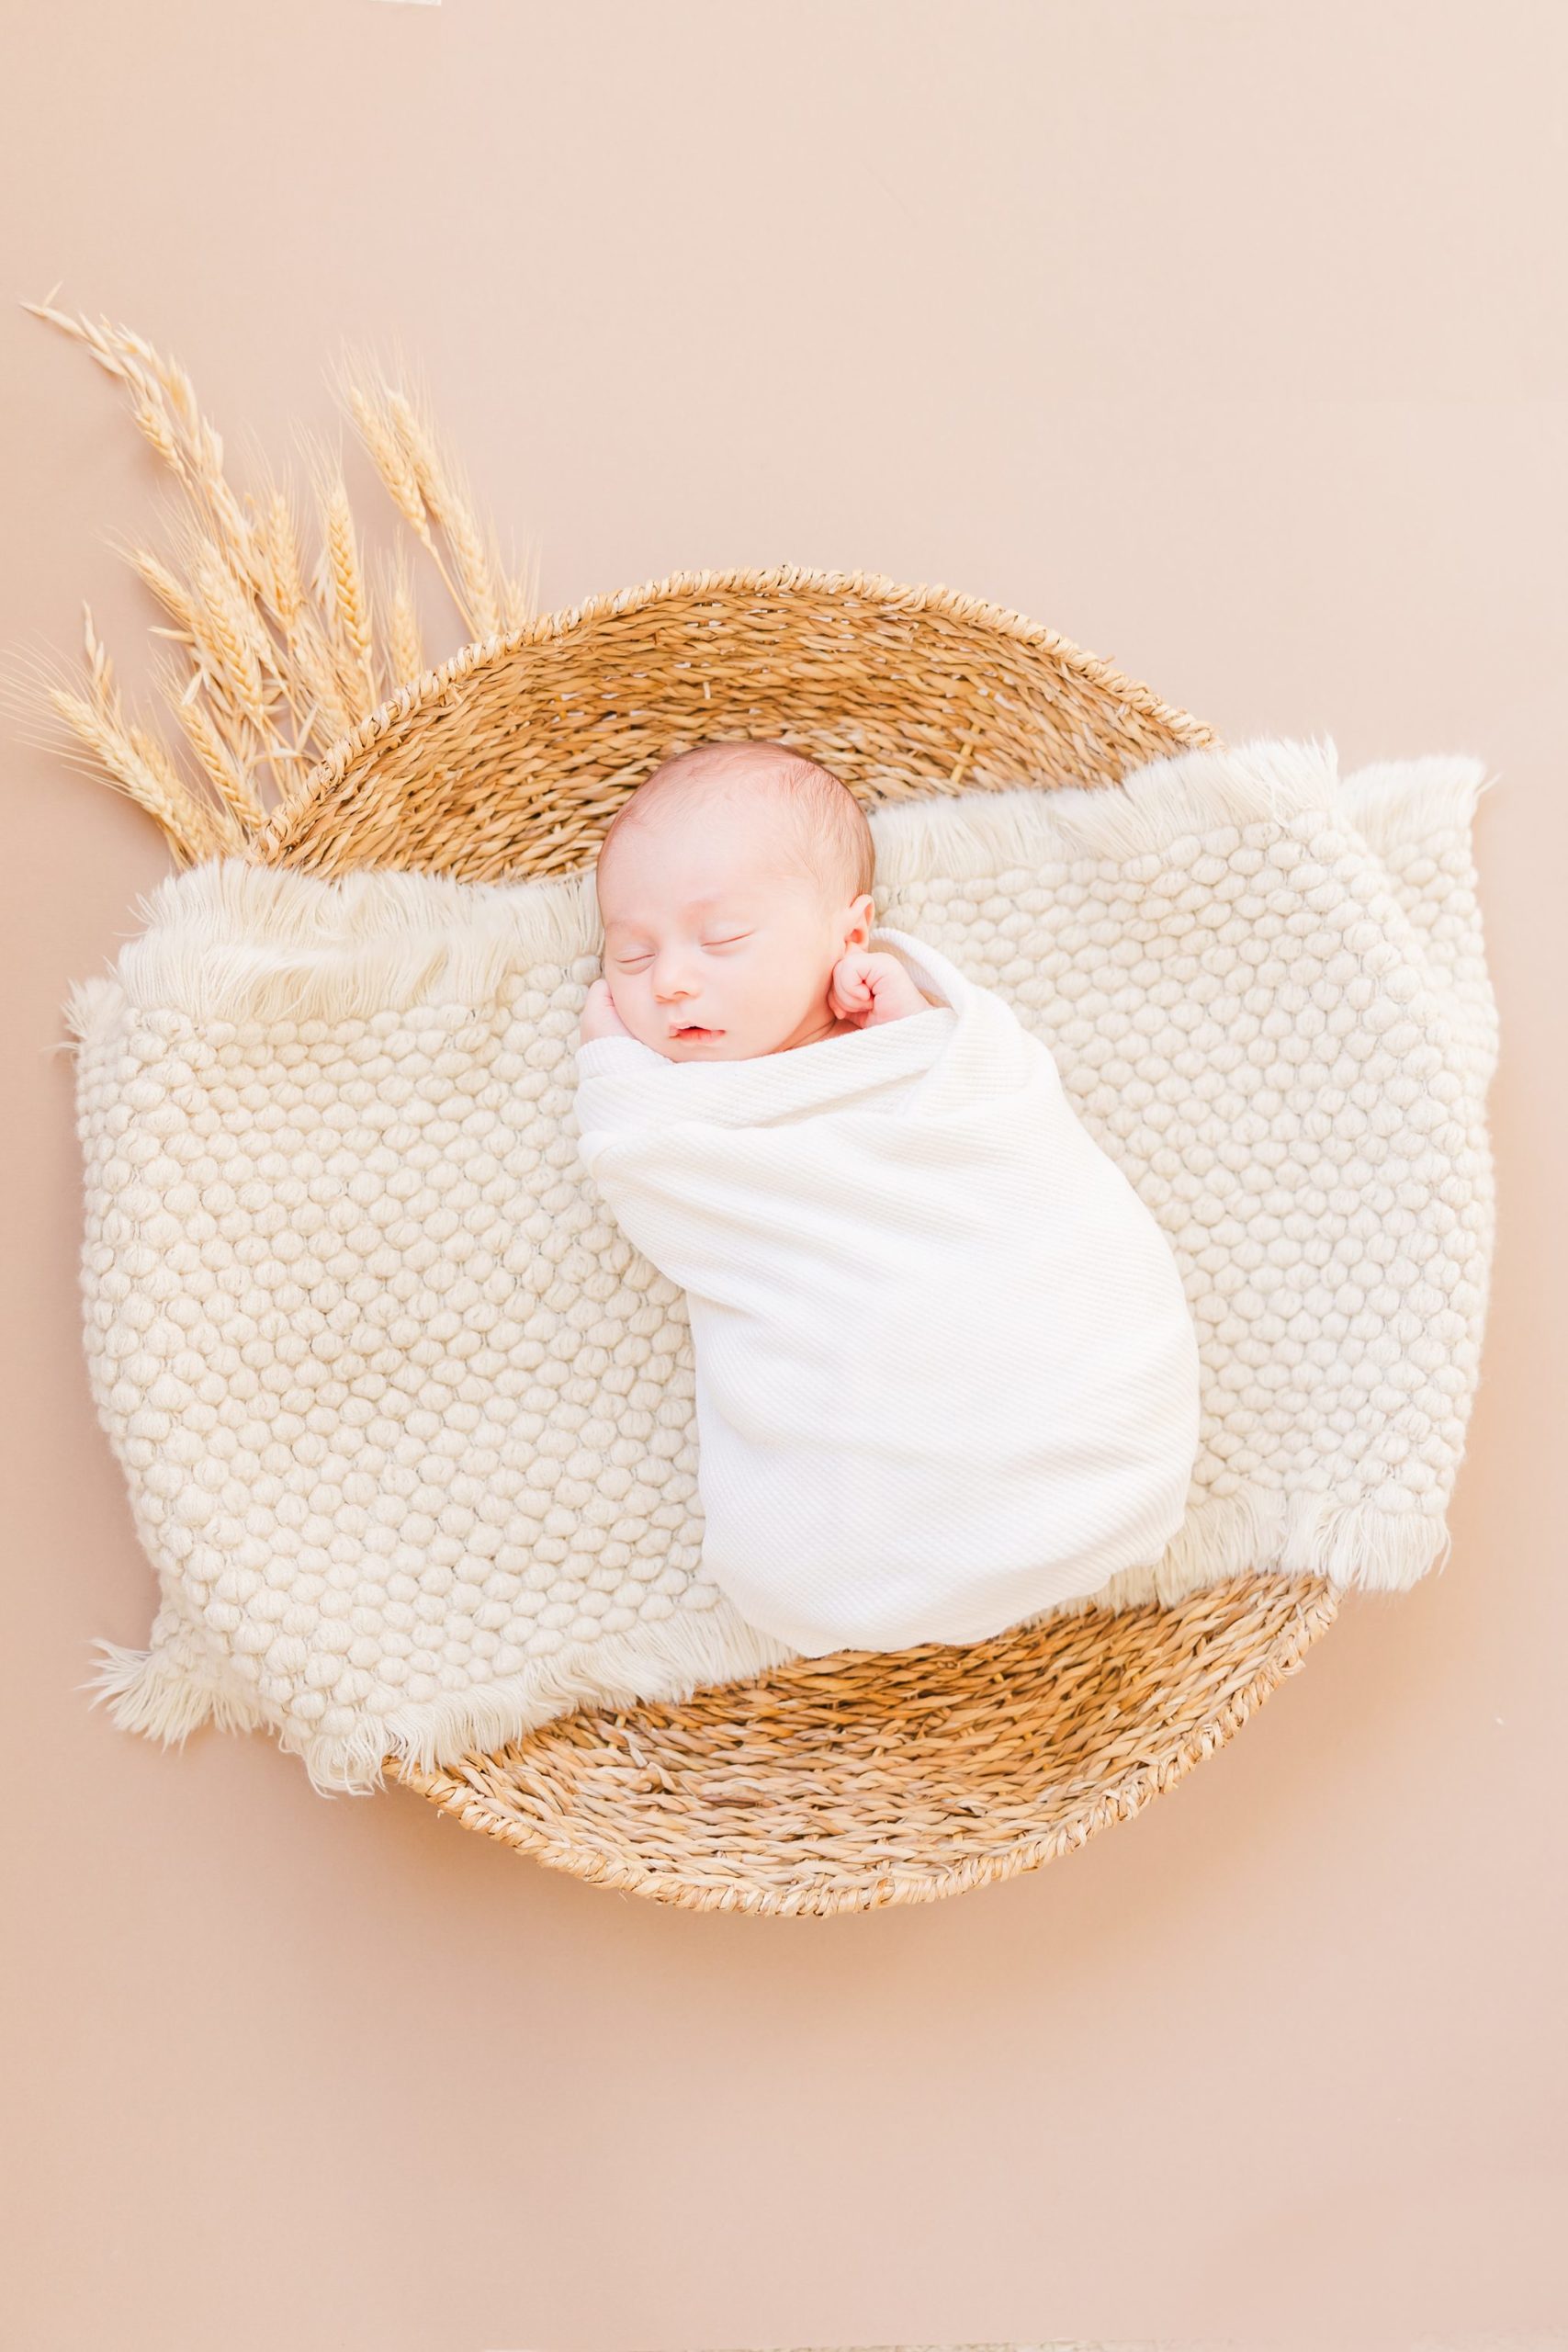 newborn on a basket